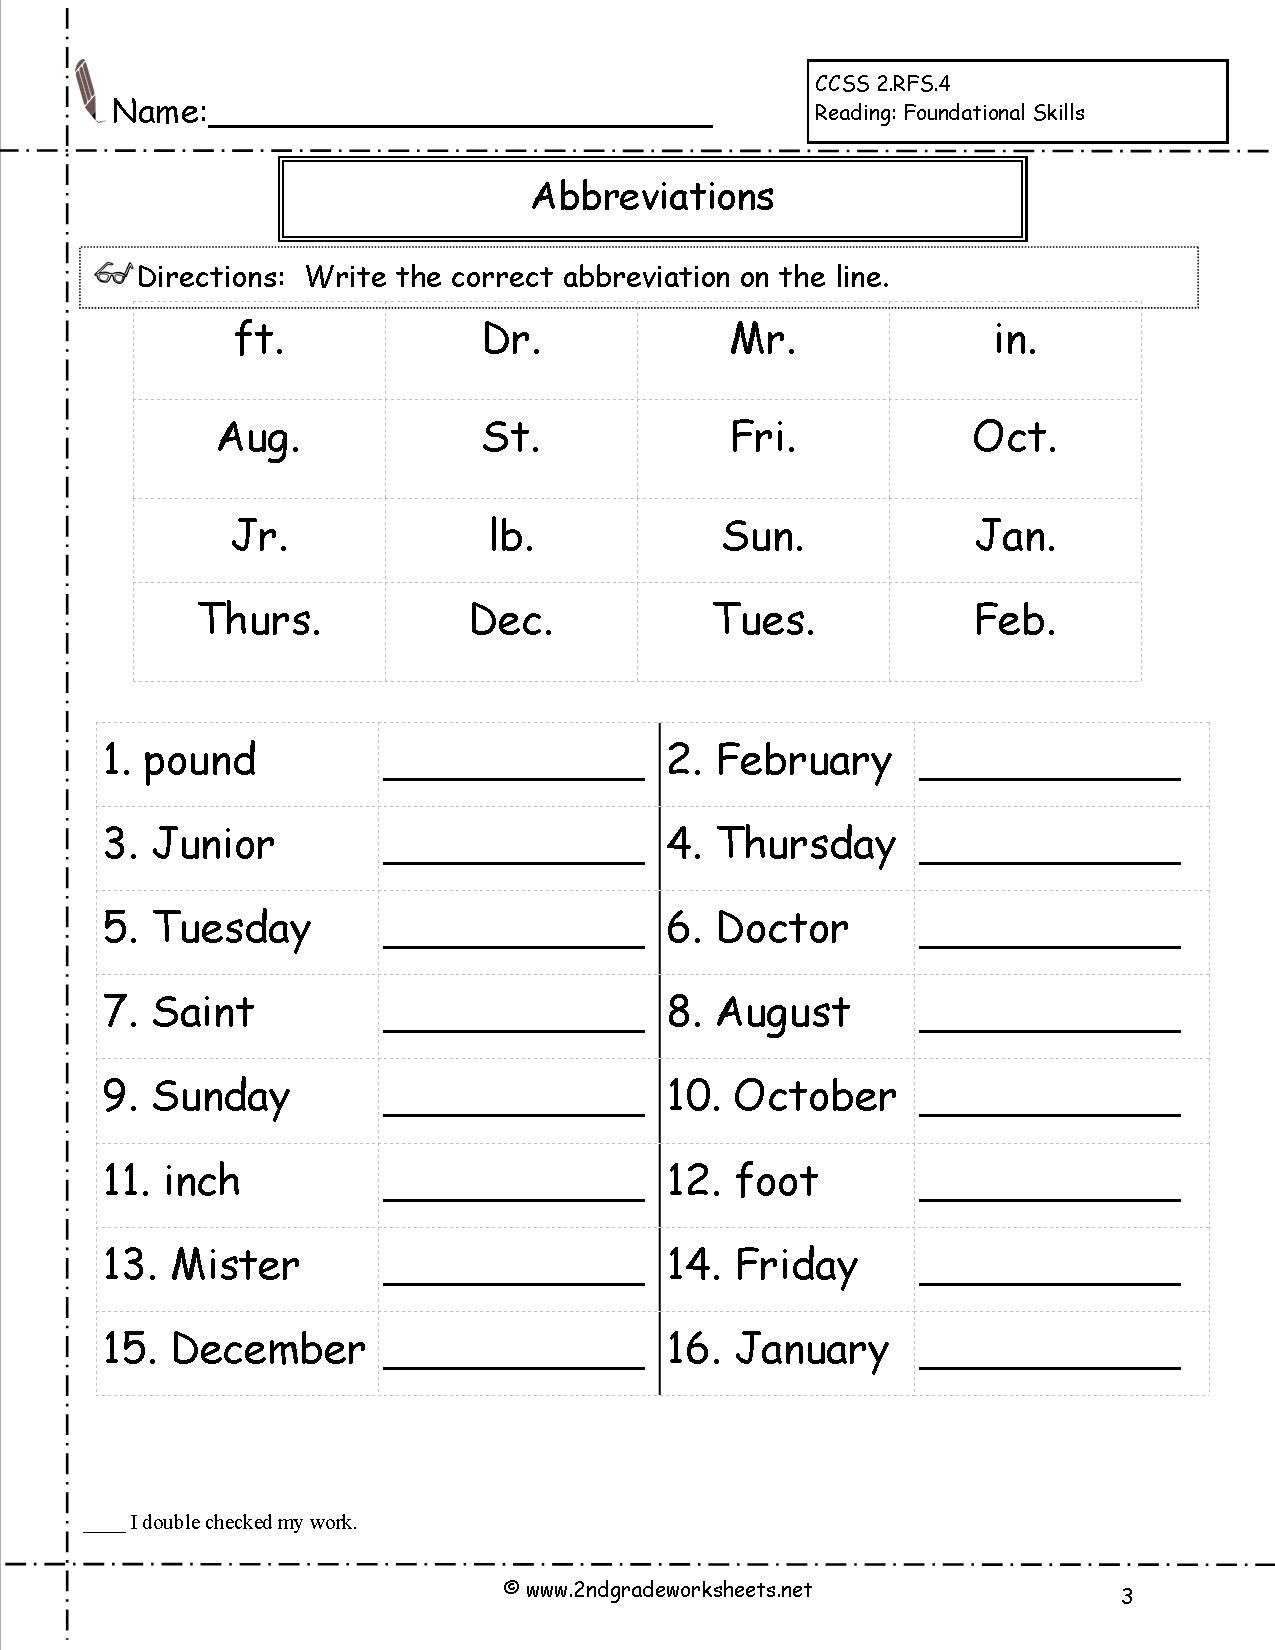 Abbreviations Worksheet | Second Grade | 2Nd Grade Worksheets, 3Rd | 3Rd Grade Language Arts Worksheets Free Printable